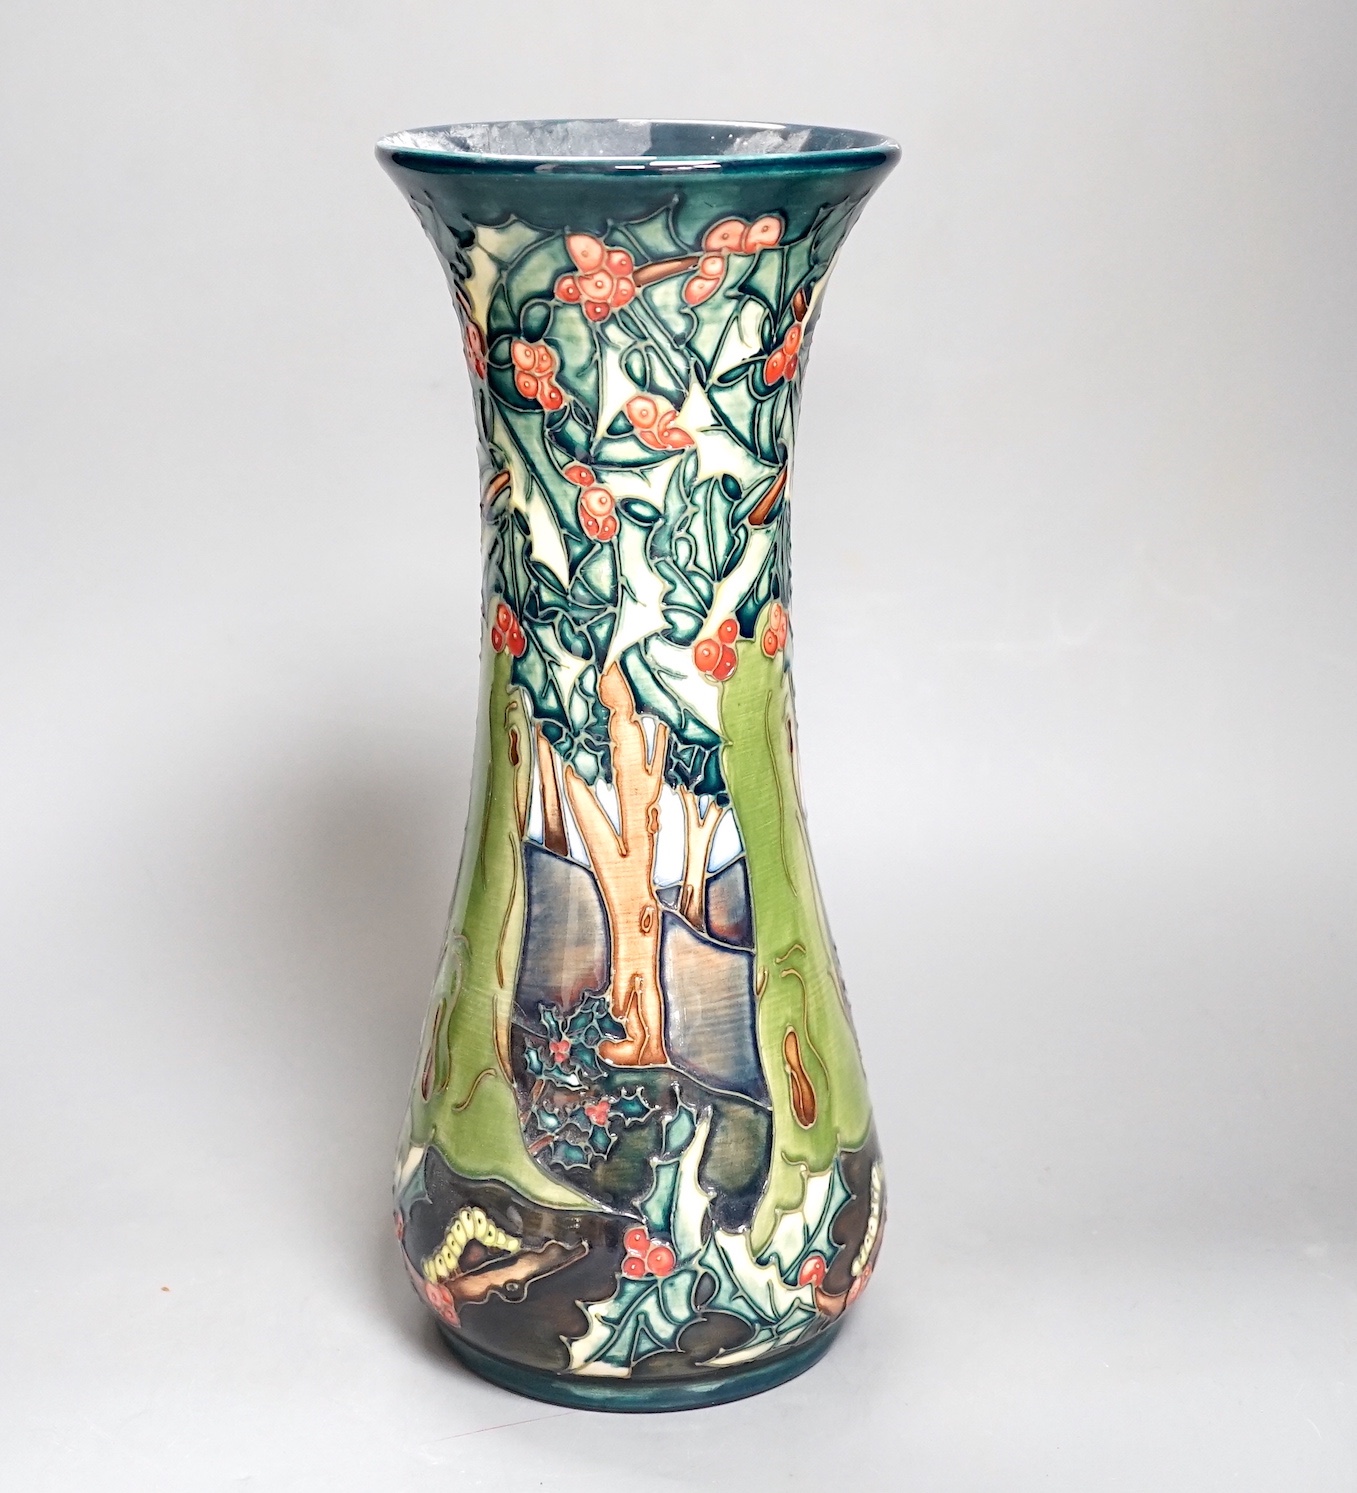 A Moorcroft vase with woodland scene - 30cm high